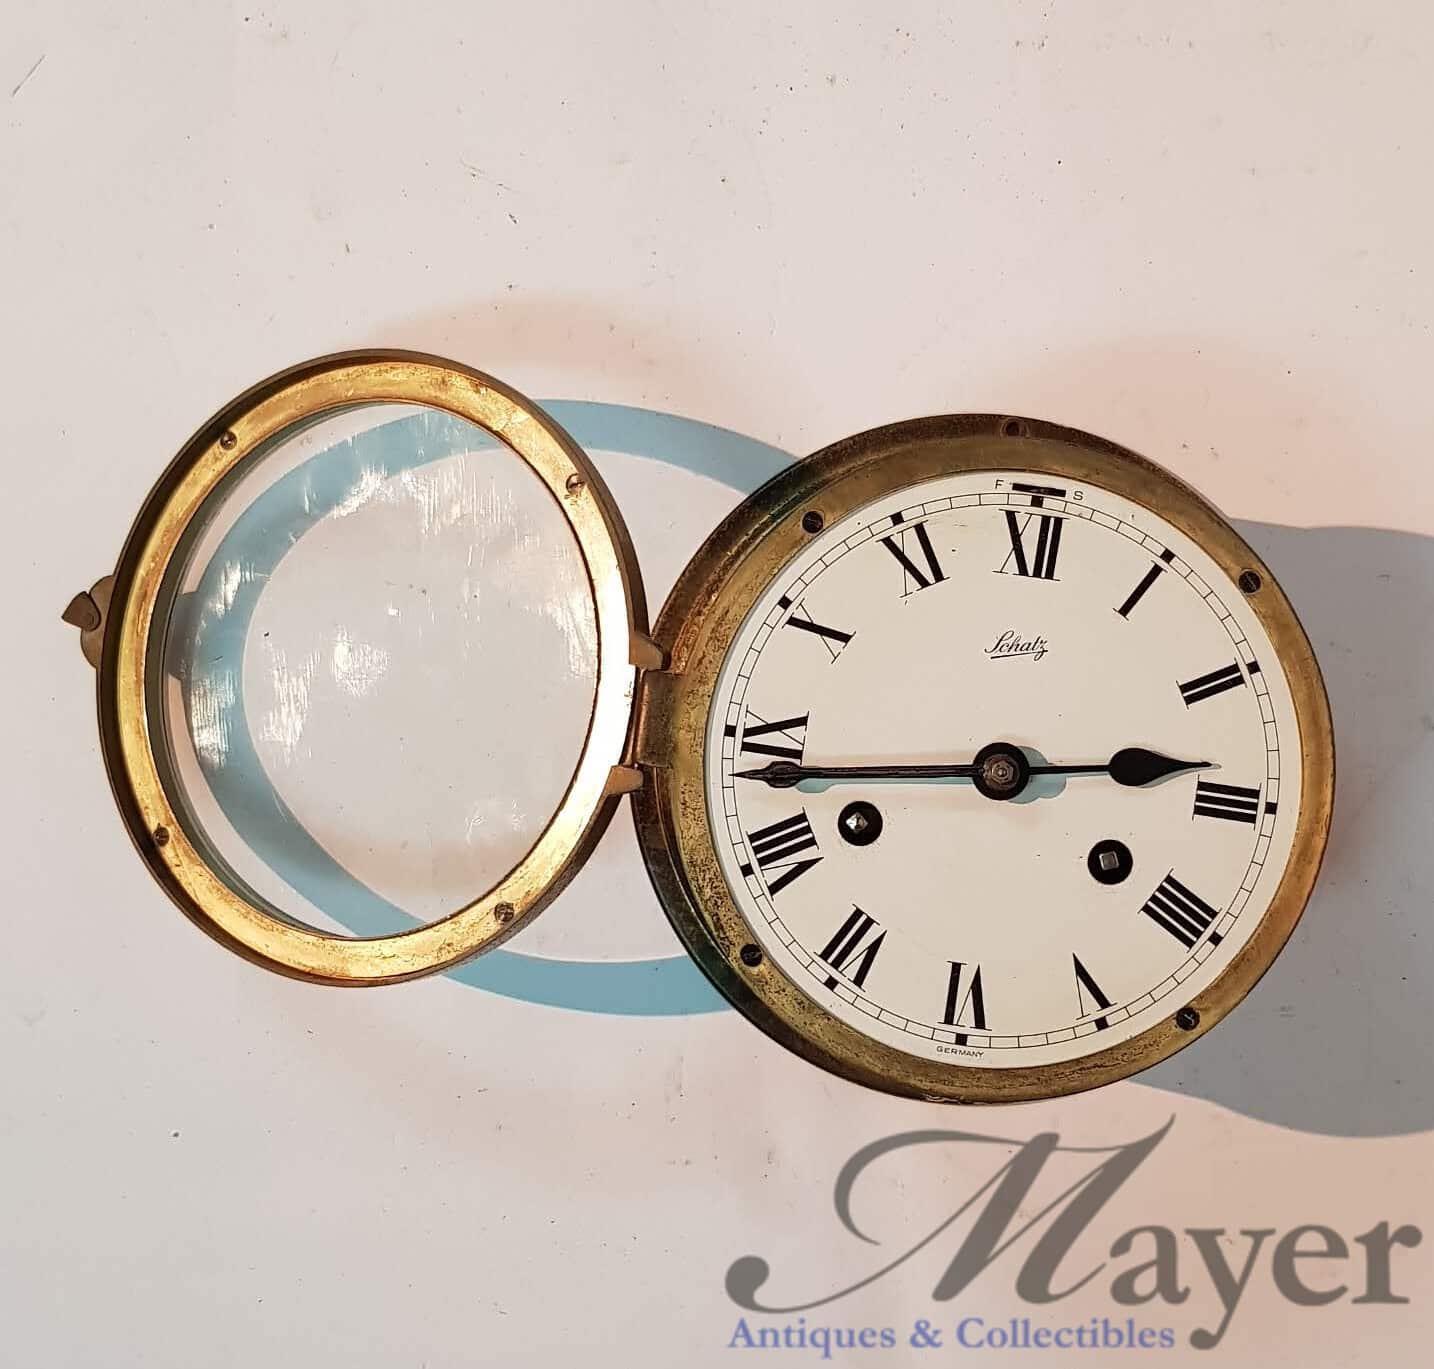 Schatz German Naval Clock - Mayer Antiques & Collectibles